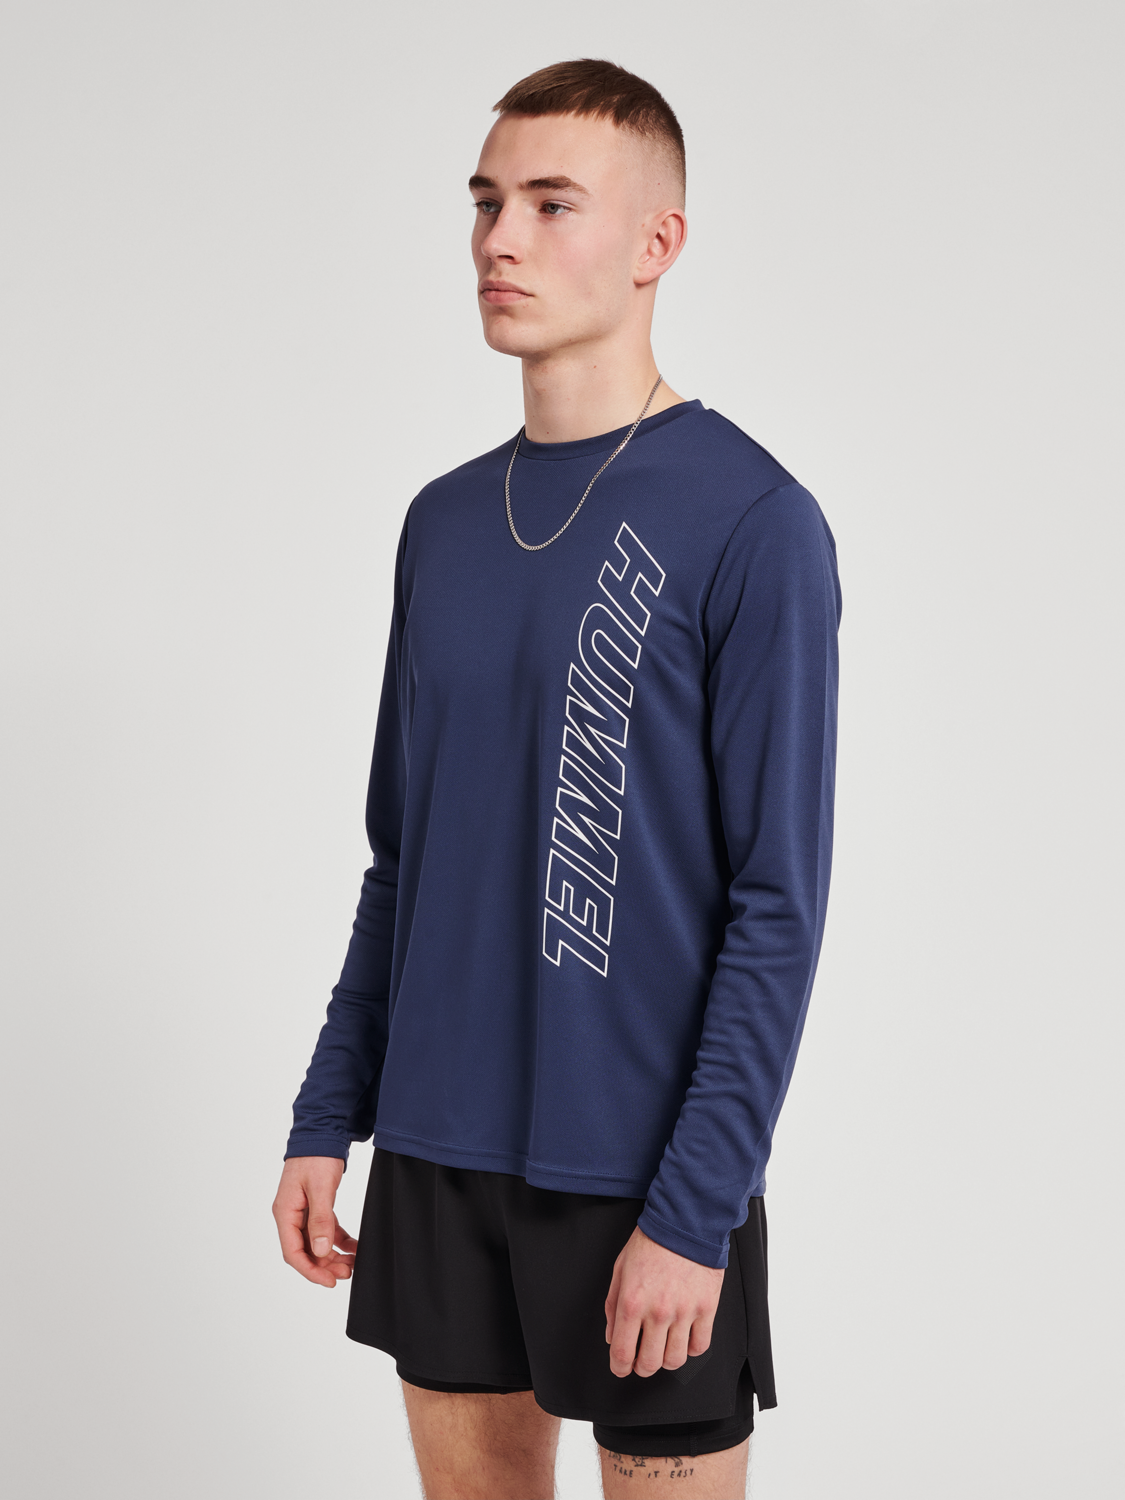 Hummel Sport T-Shirt - marine/stone-blue denim 